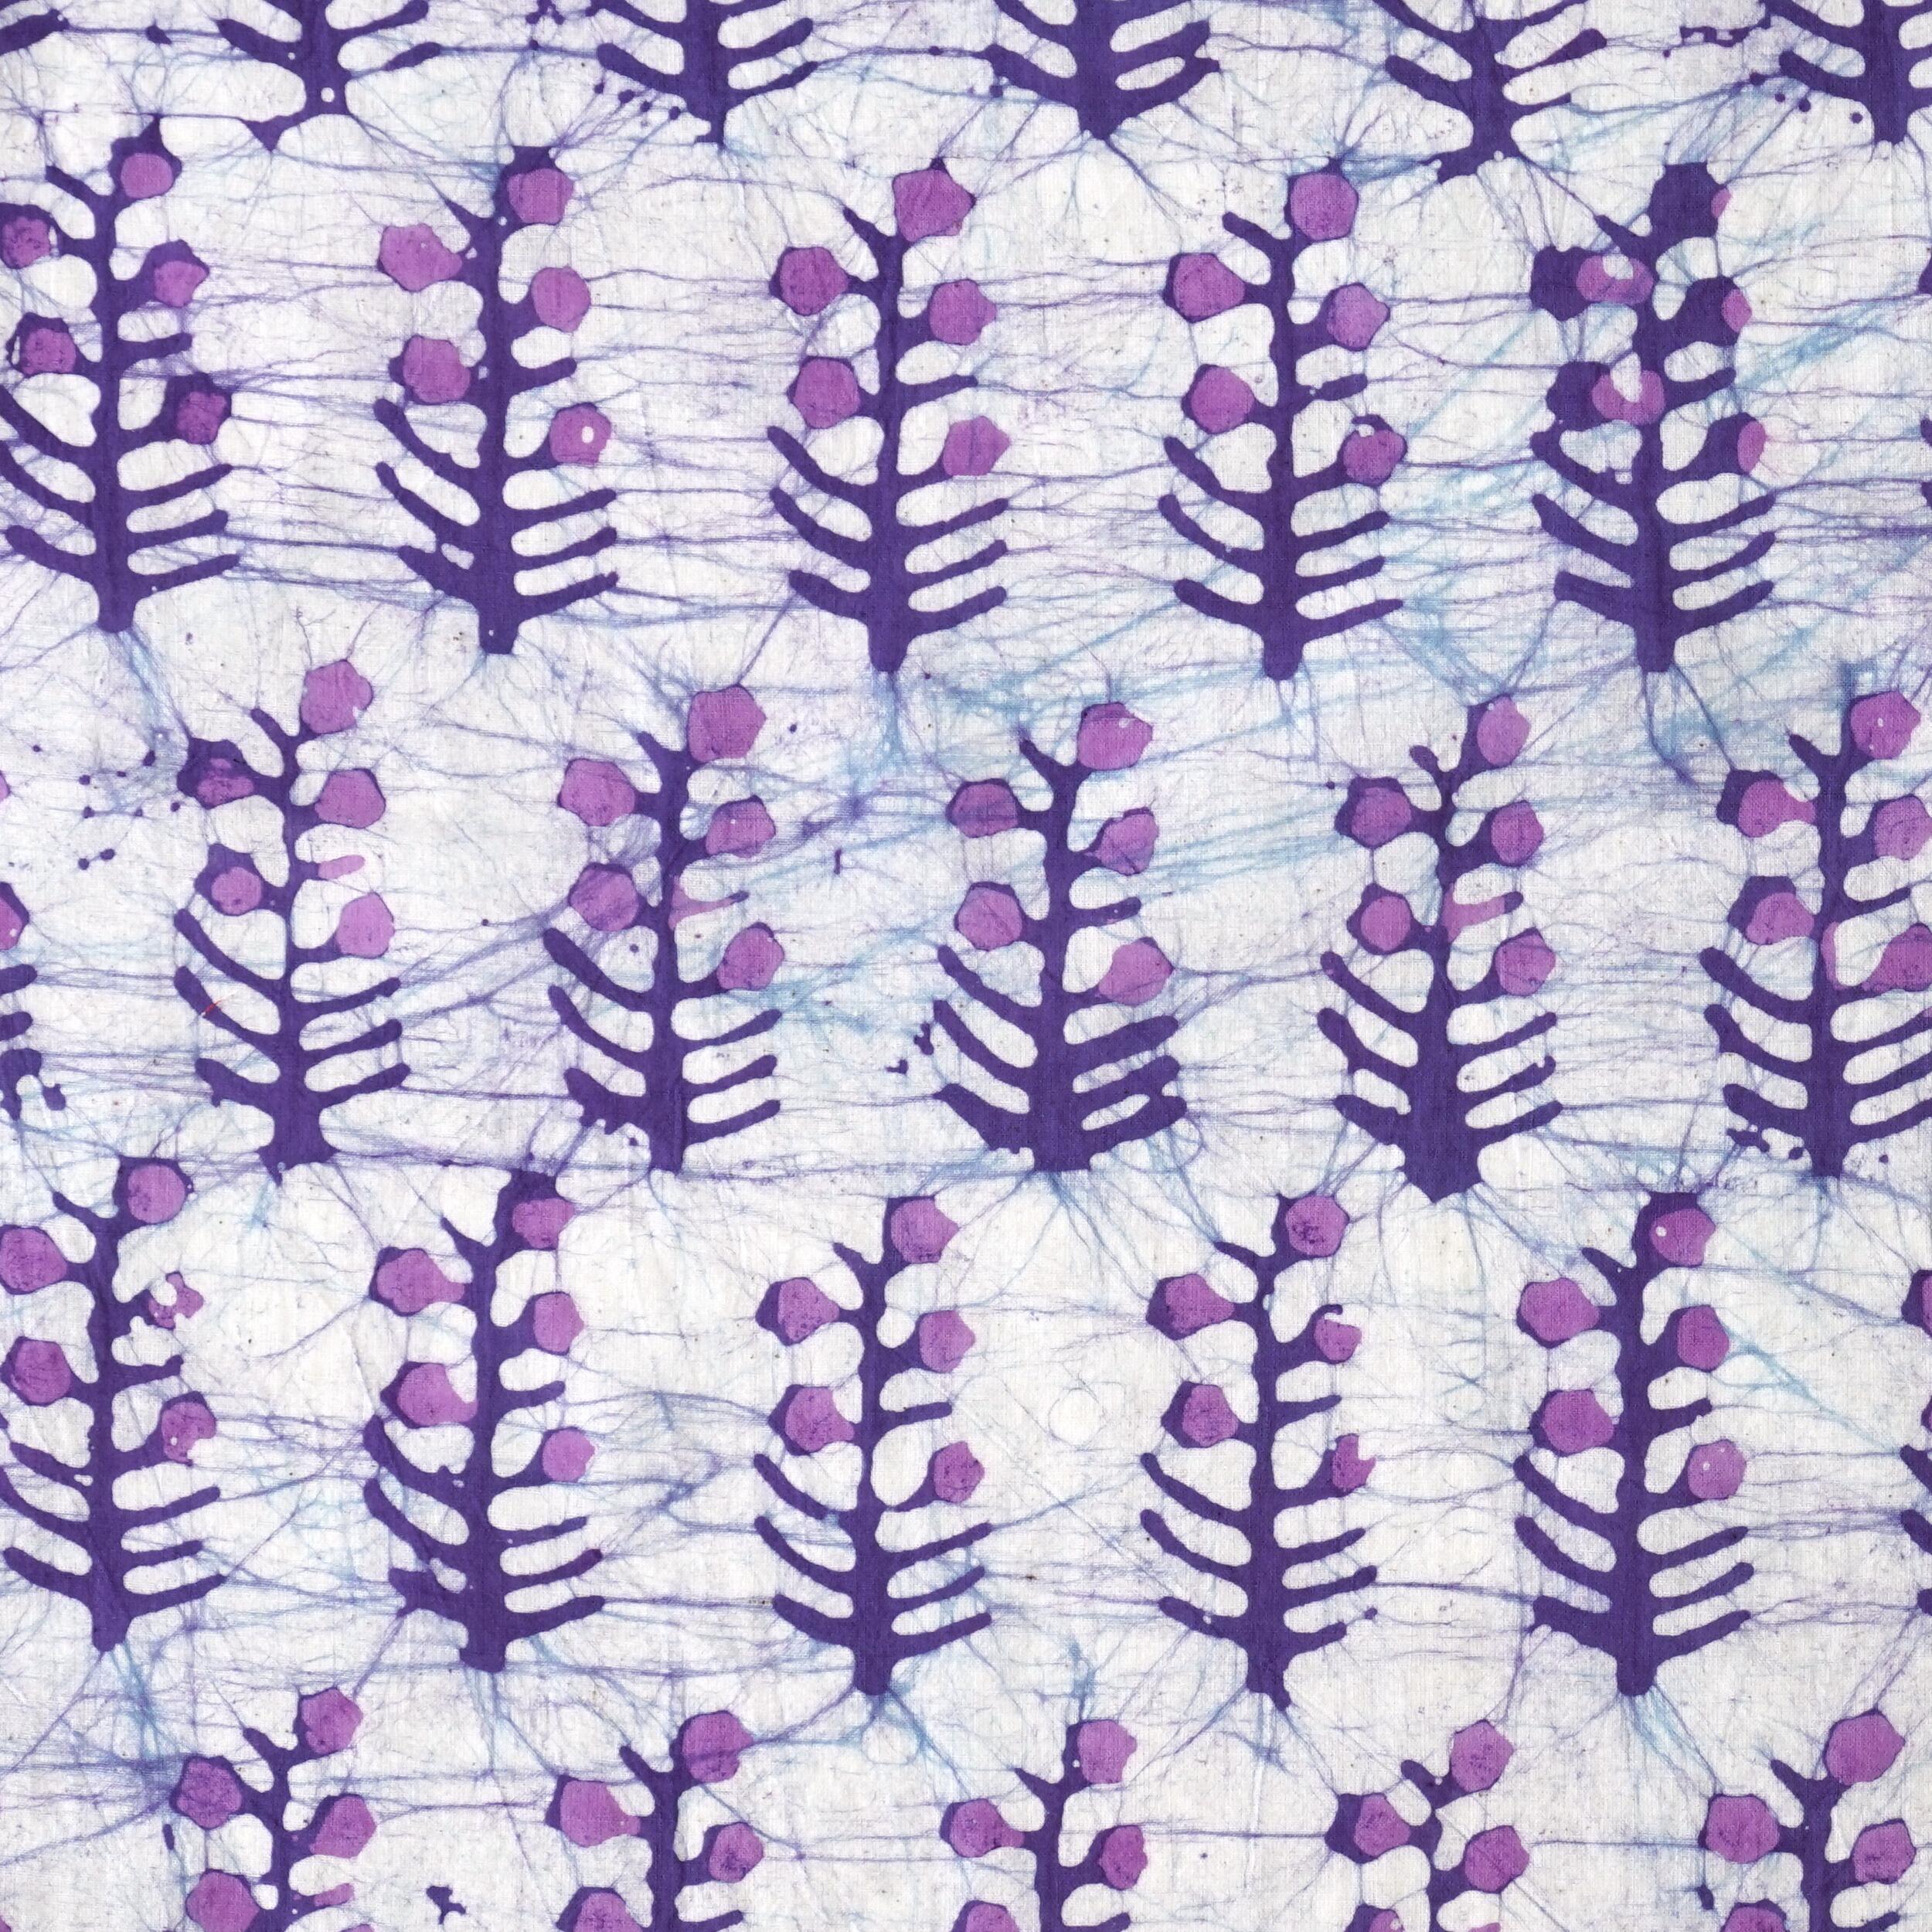 100% Block-Printed Batik Cotton Fabric From India - Purple Reactive Dye - Flat